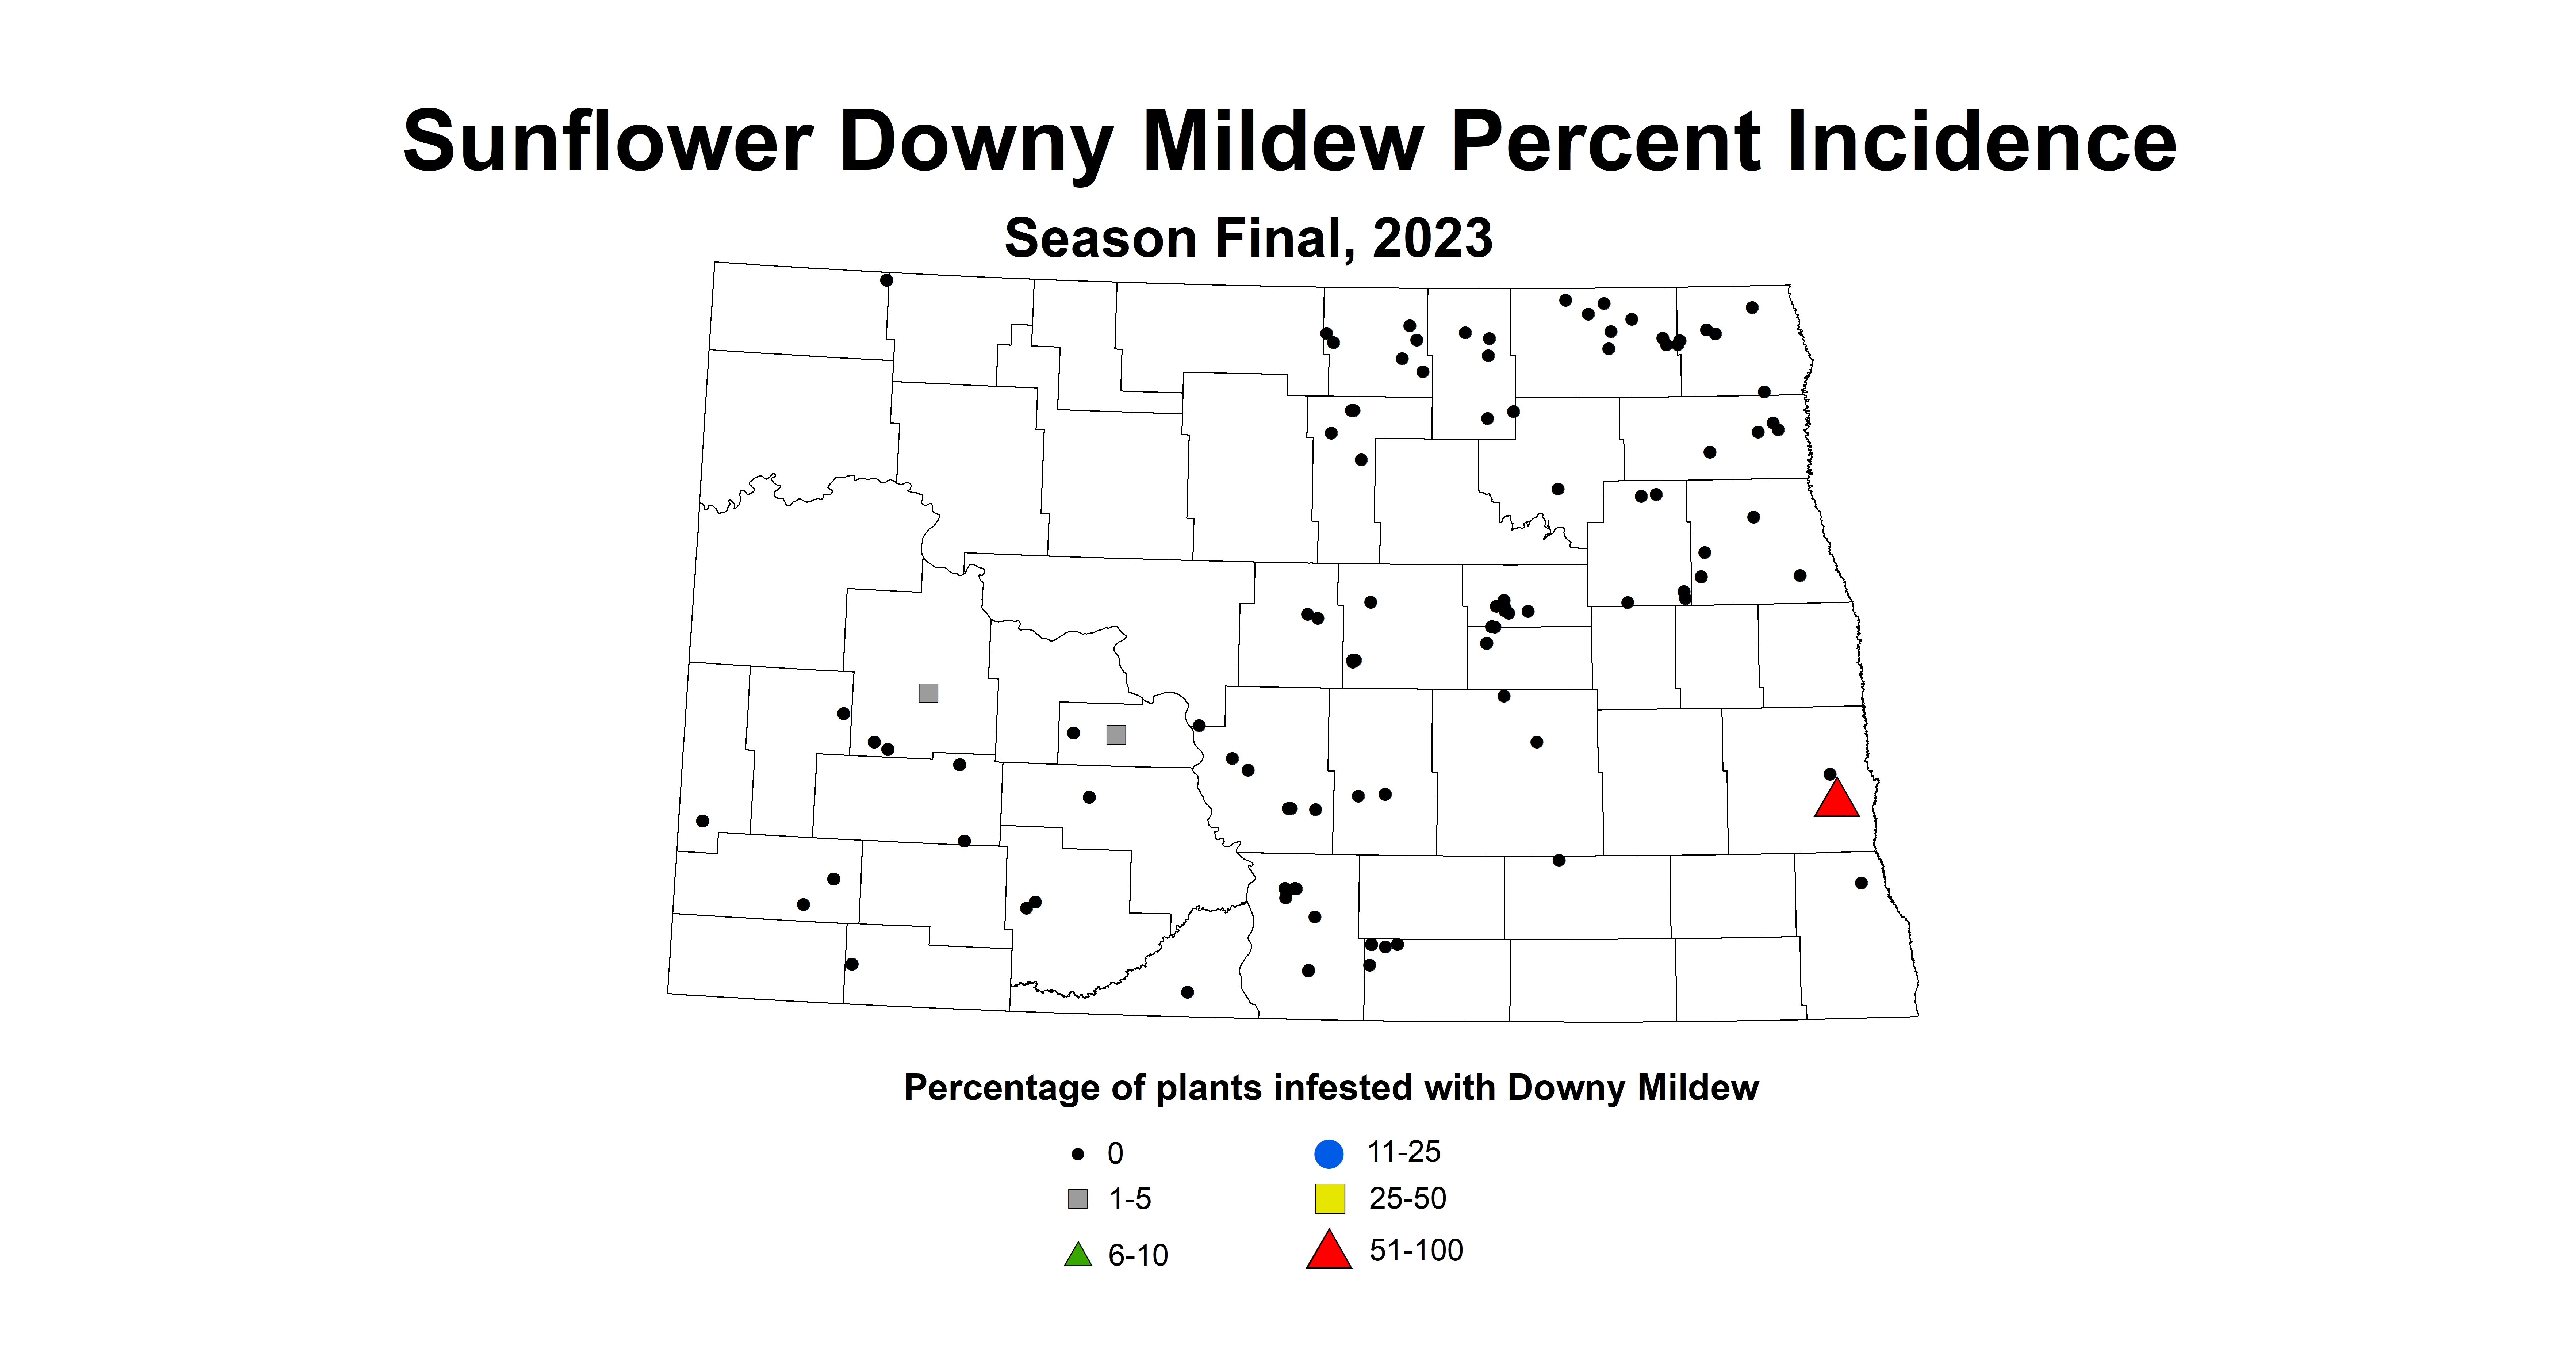 sunflower downy mildew incidence season final 2023